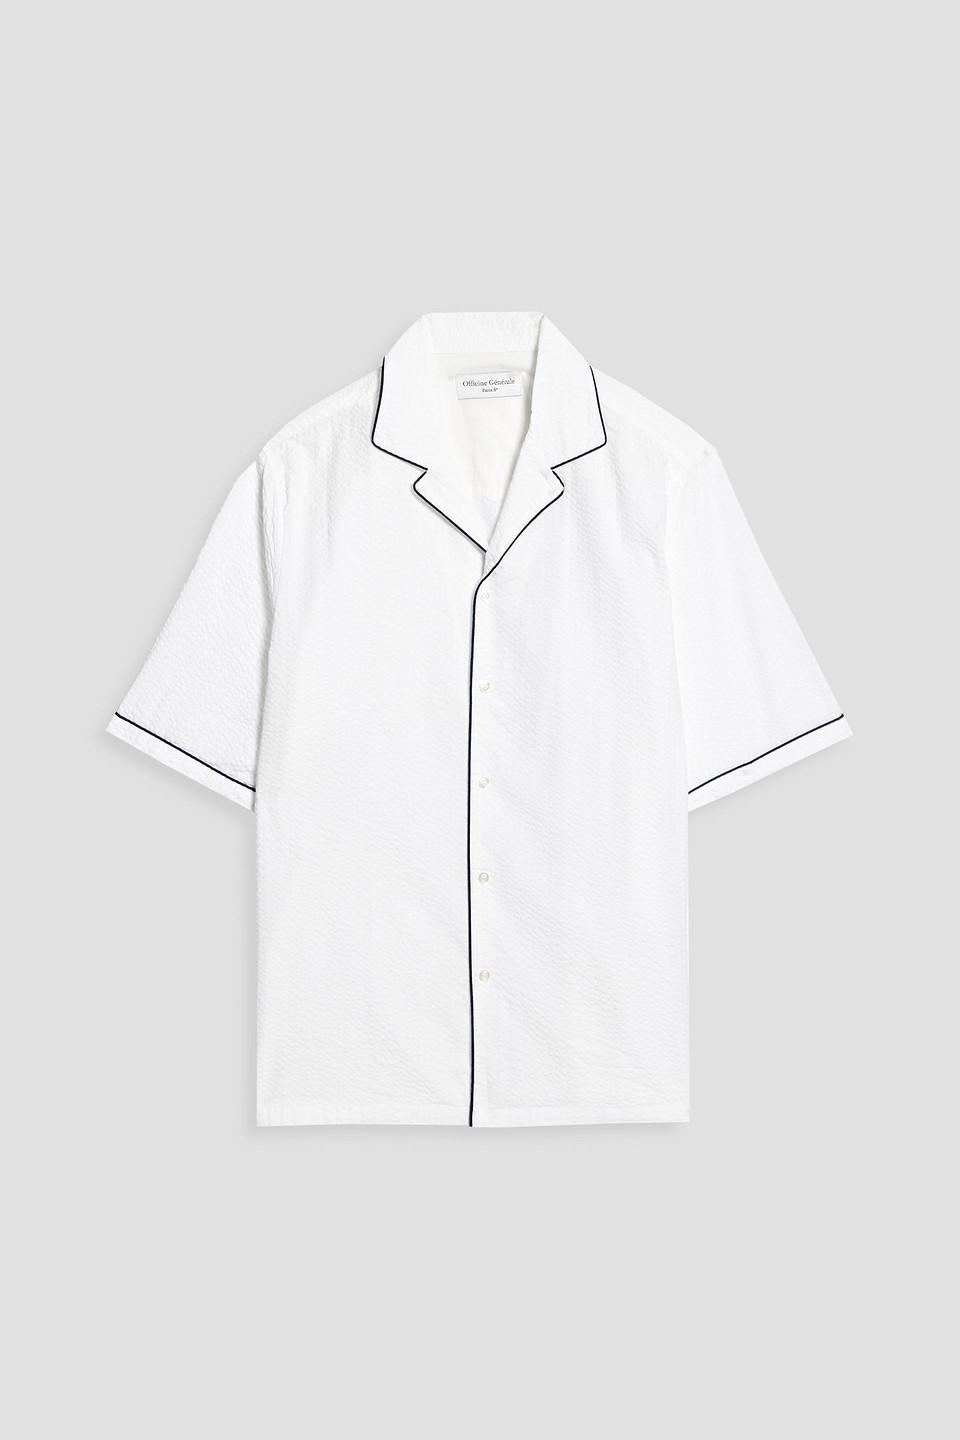 Officine Generale Eren Cotton-seersucker Shirt in White for Men | Lyst